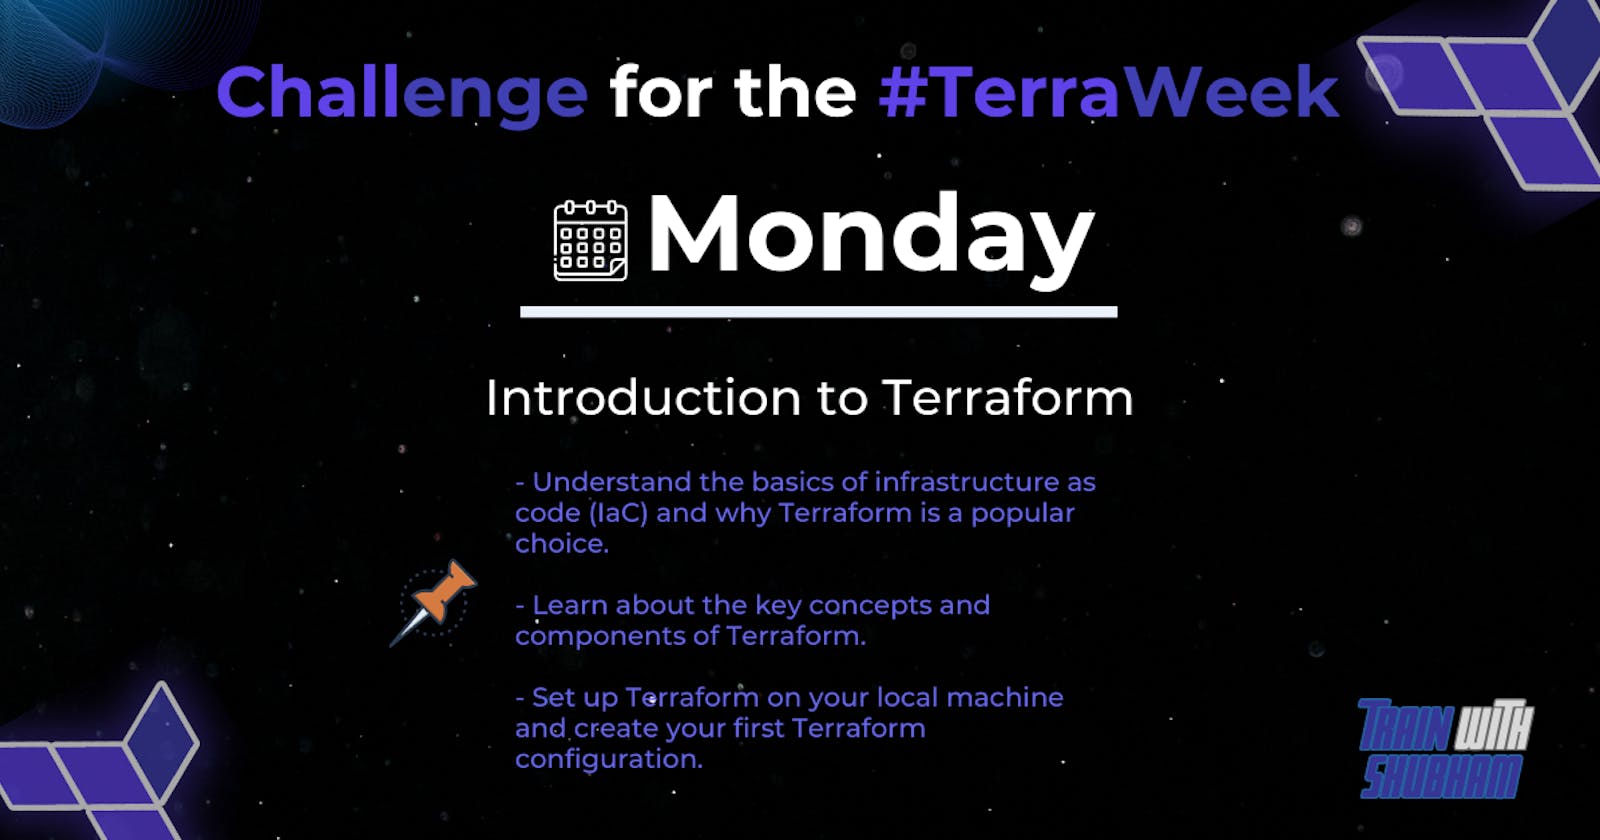 Day 1 - Introduction to Terraform and Terraform Basics